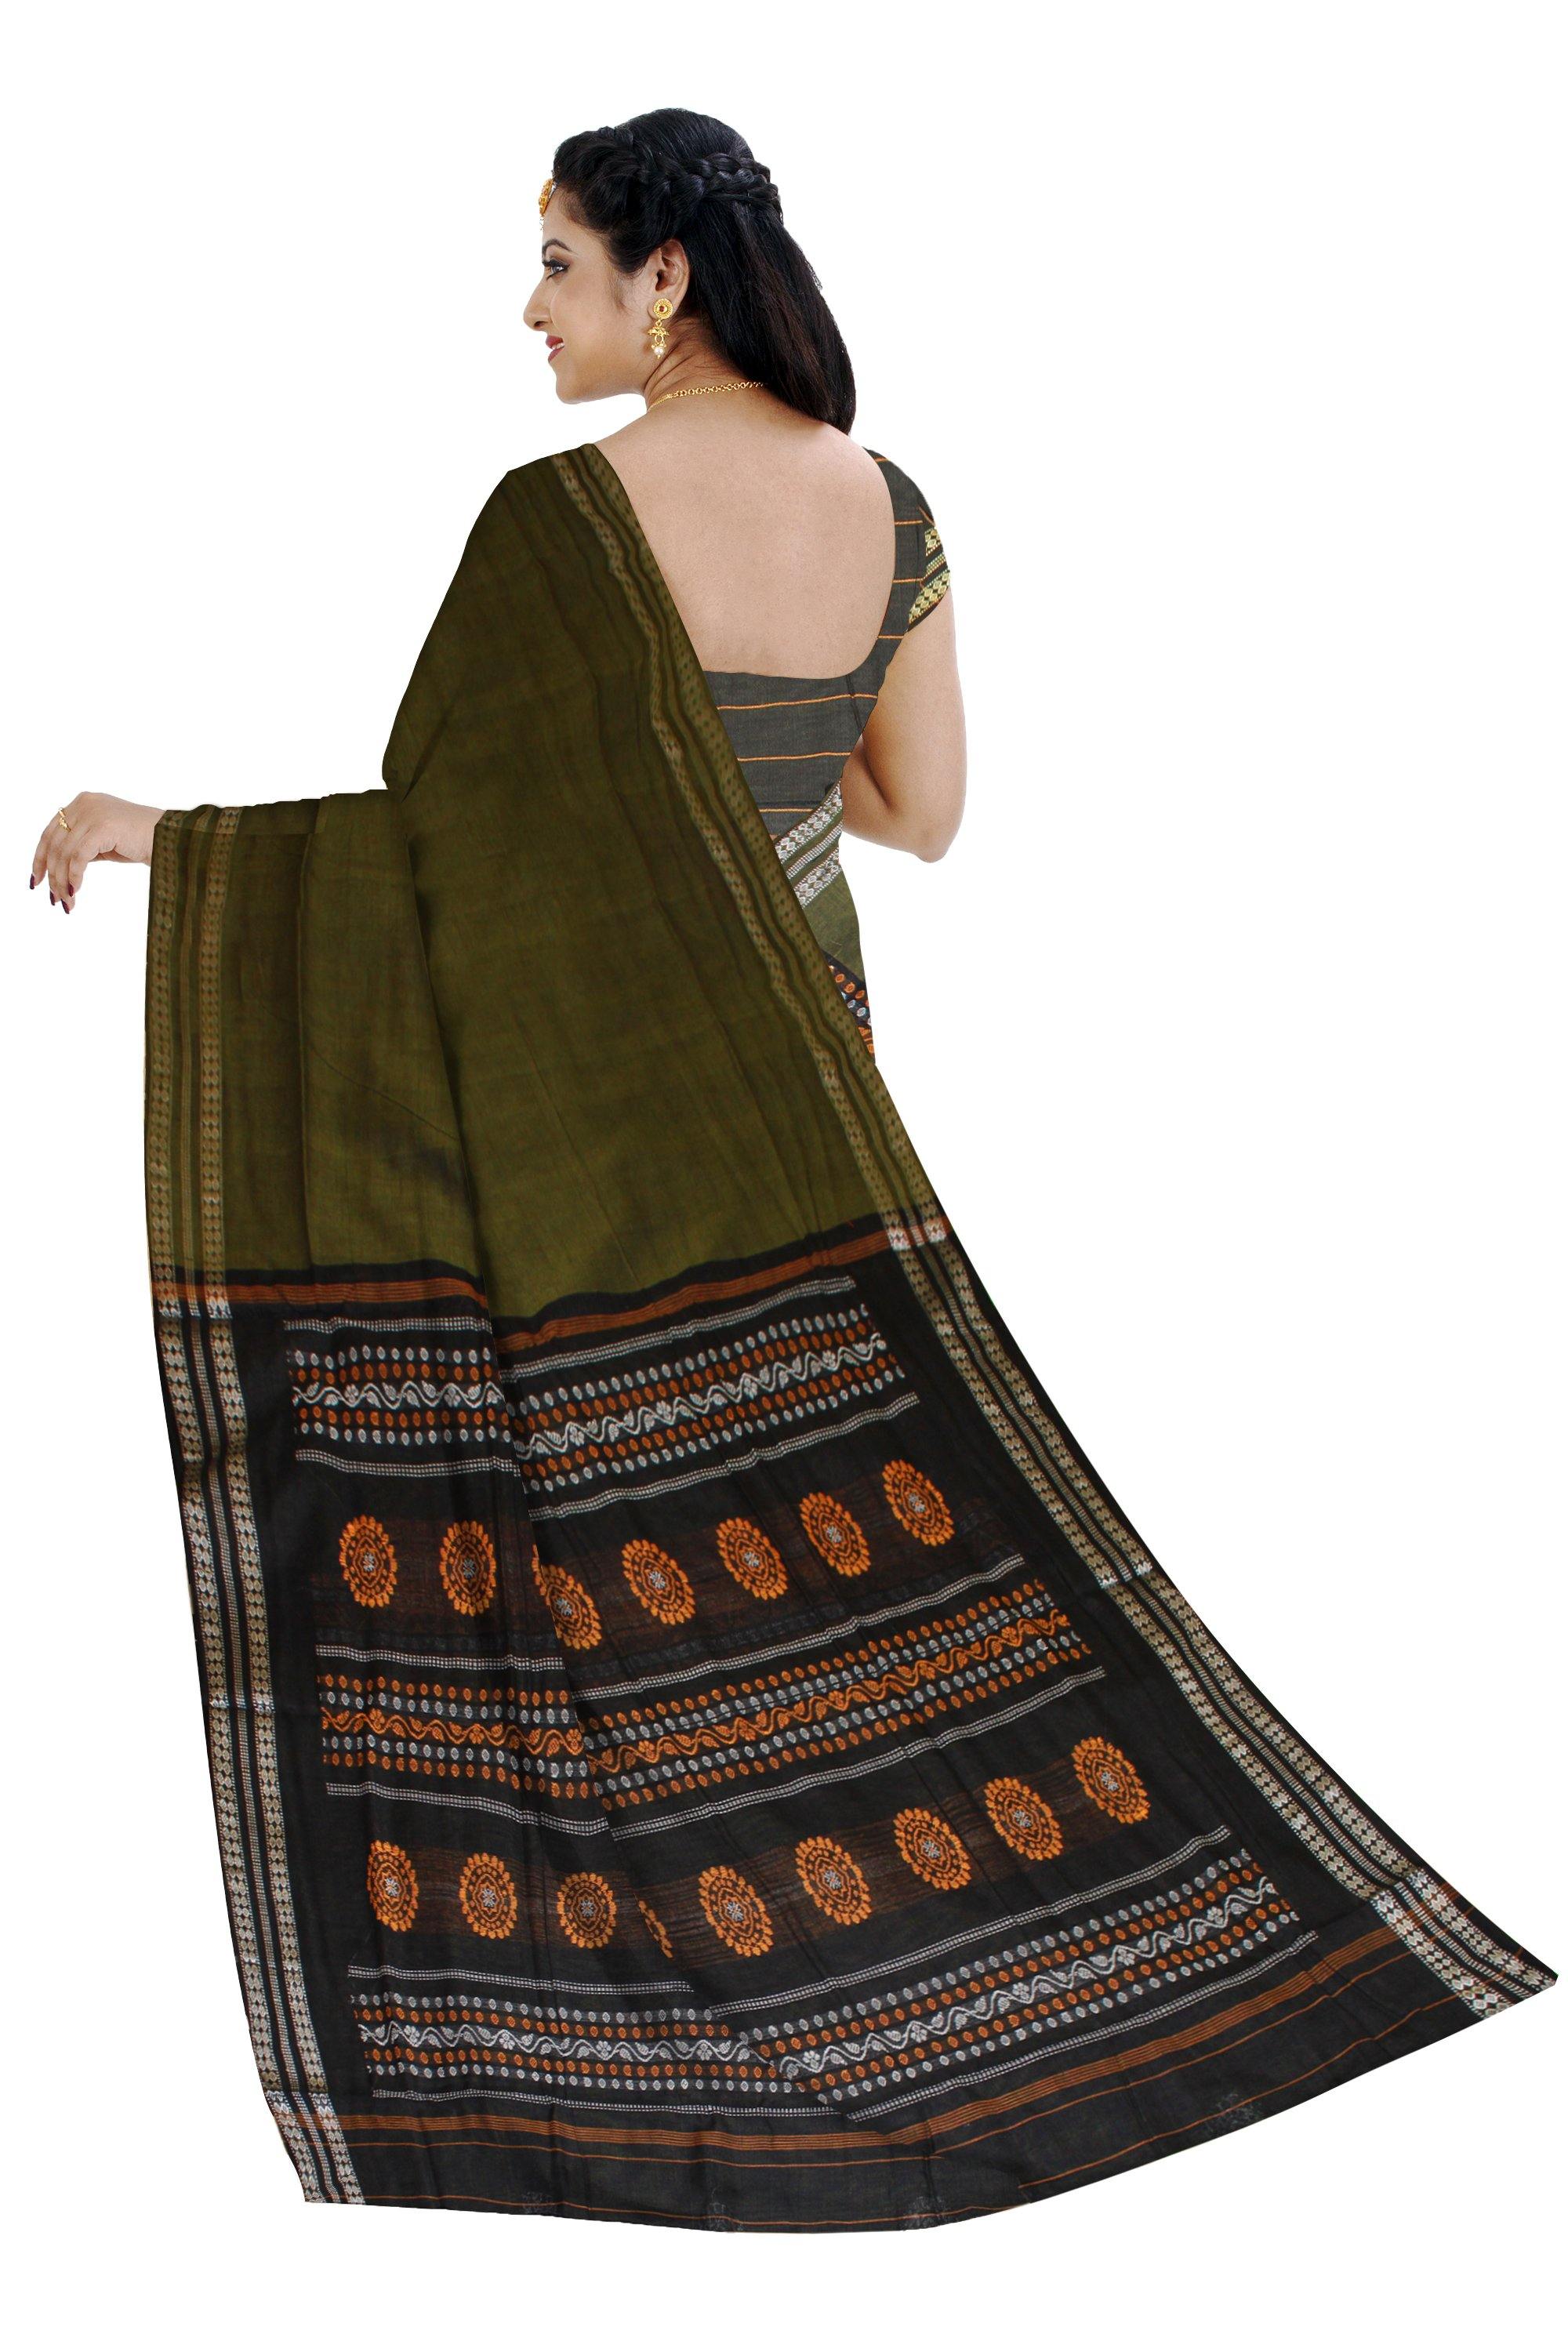 Sambalpuri Bomkei pattern flower print saree in deep green color with blouse piece - Koshali Arts & Crafts Enterprise